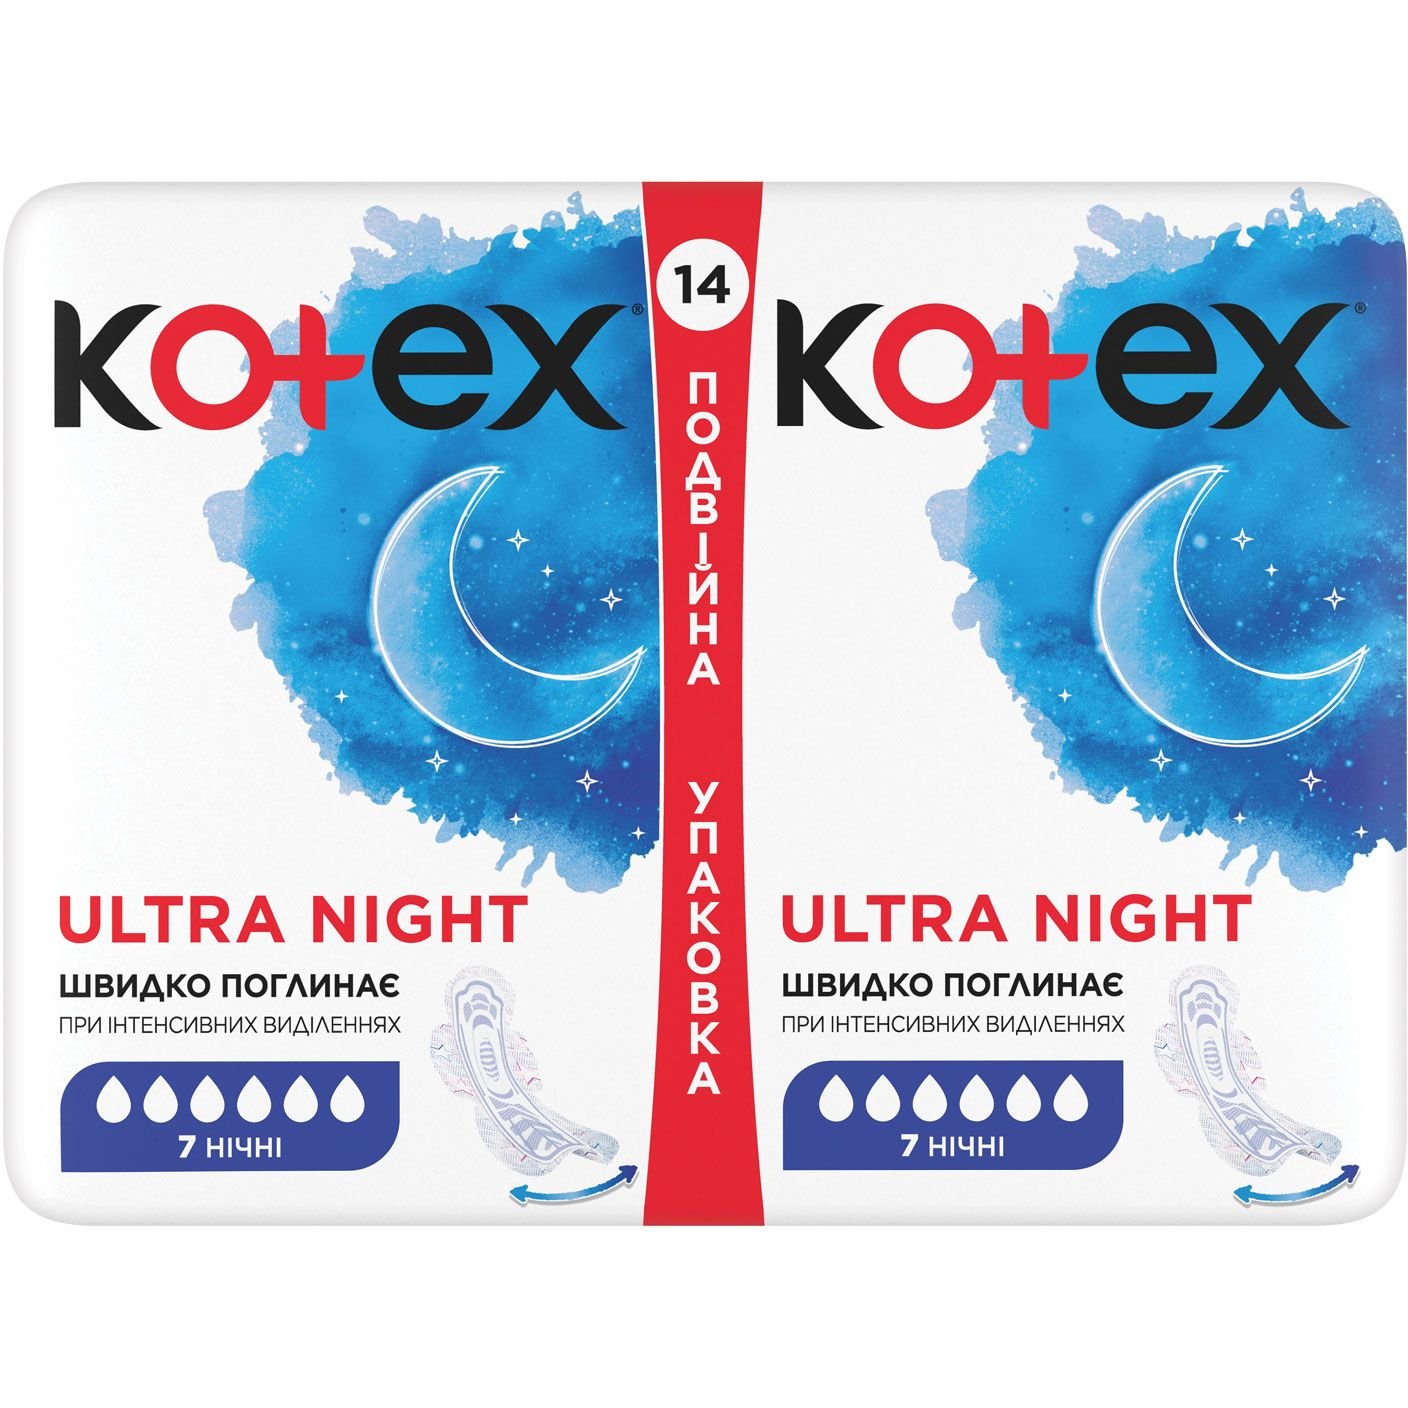 Гигиенические прокладки Kotex Ultra Night Duo, 14 шт. - фото 2